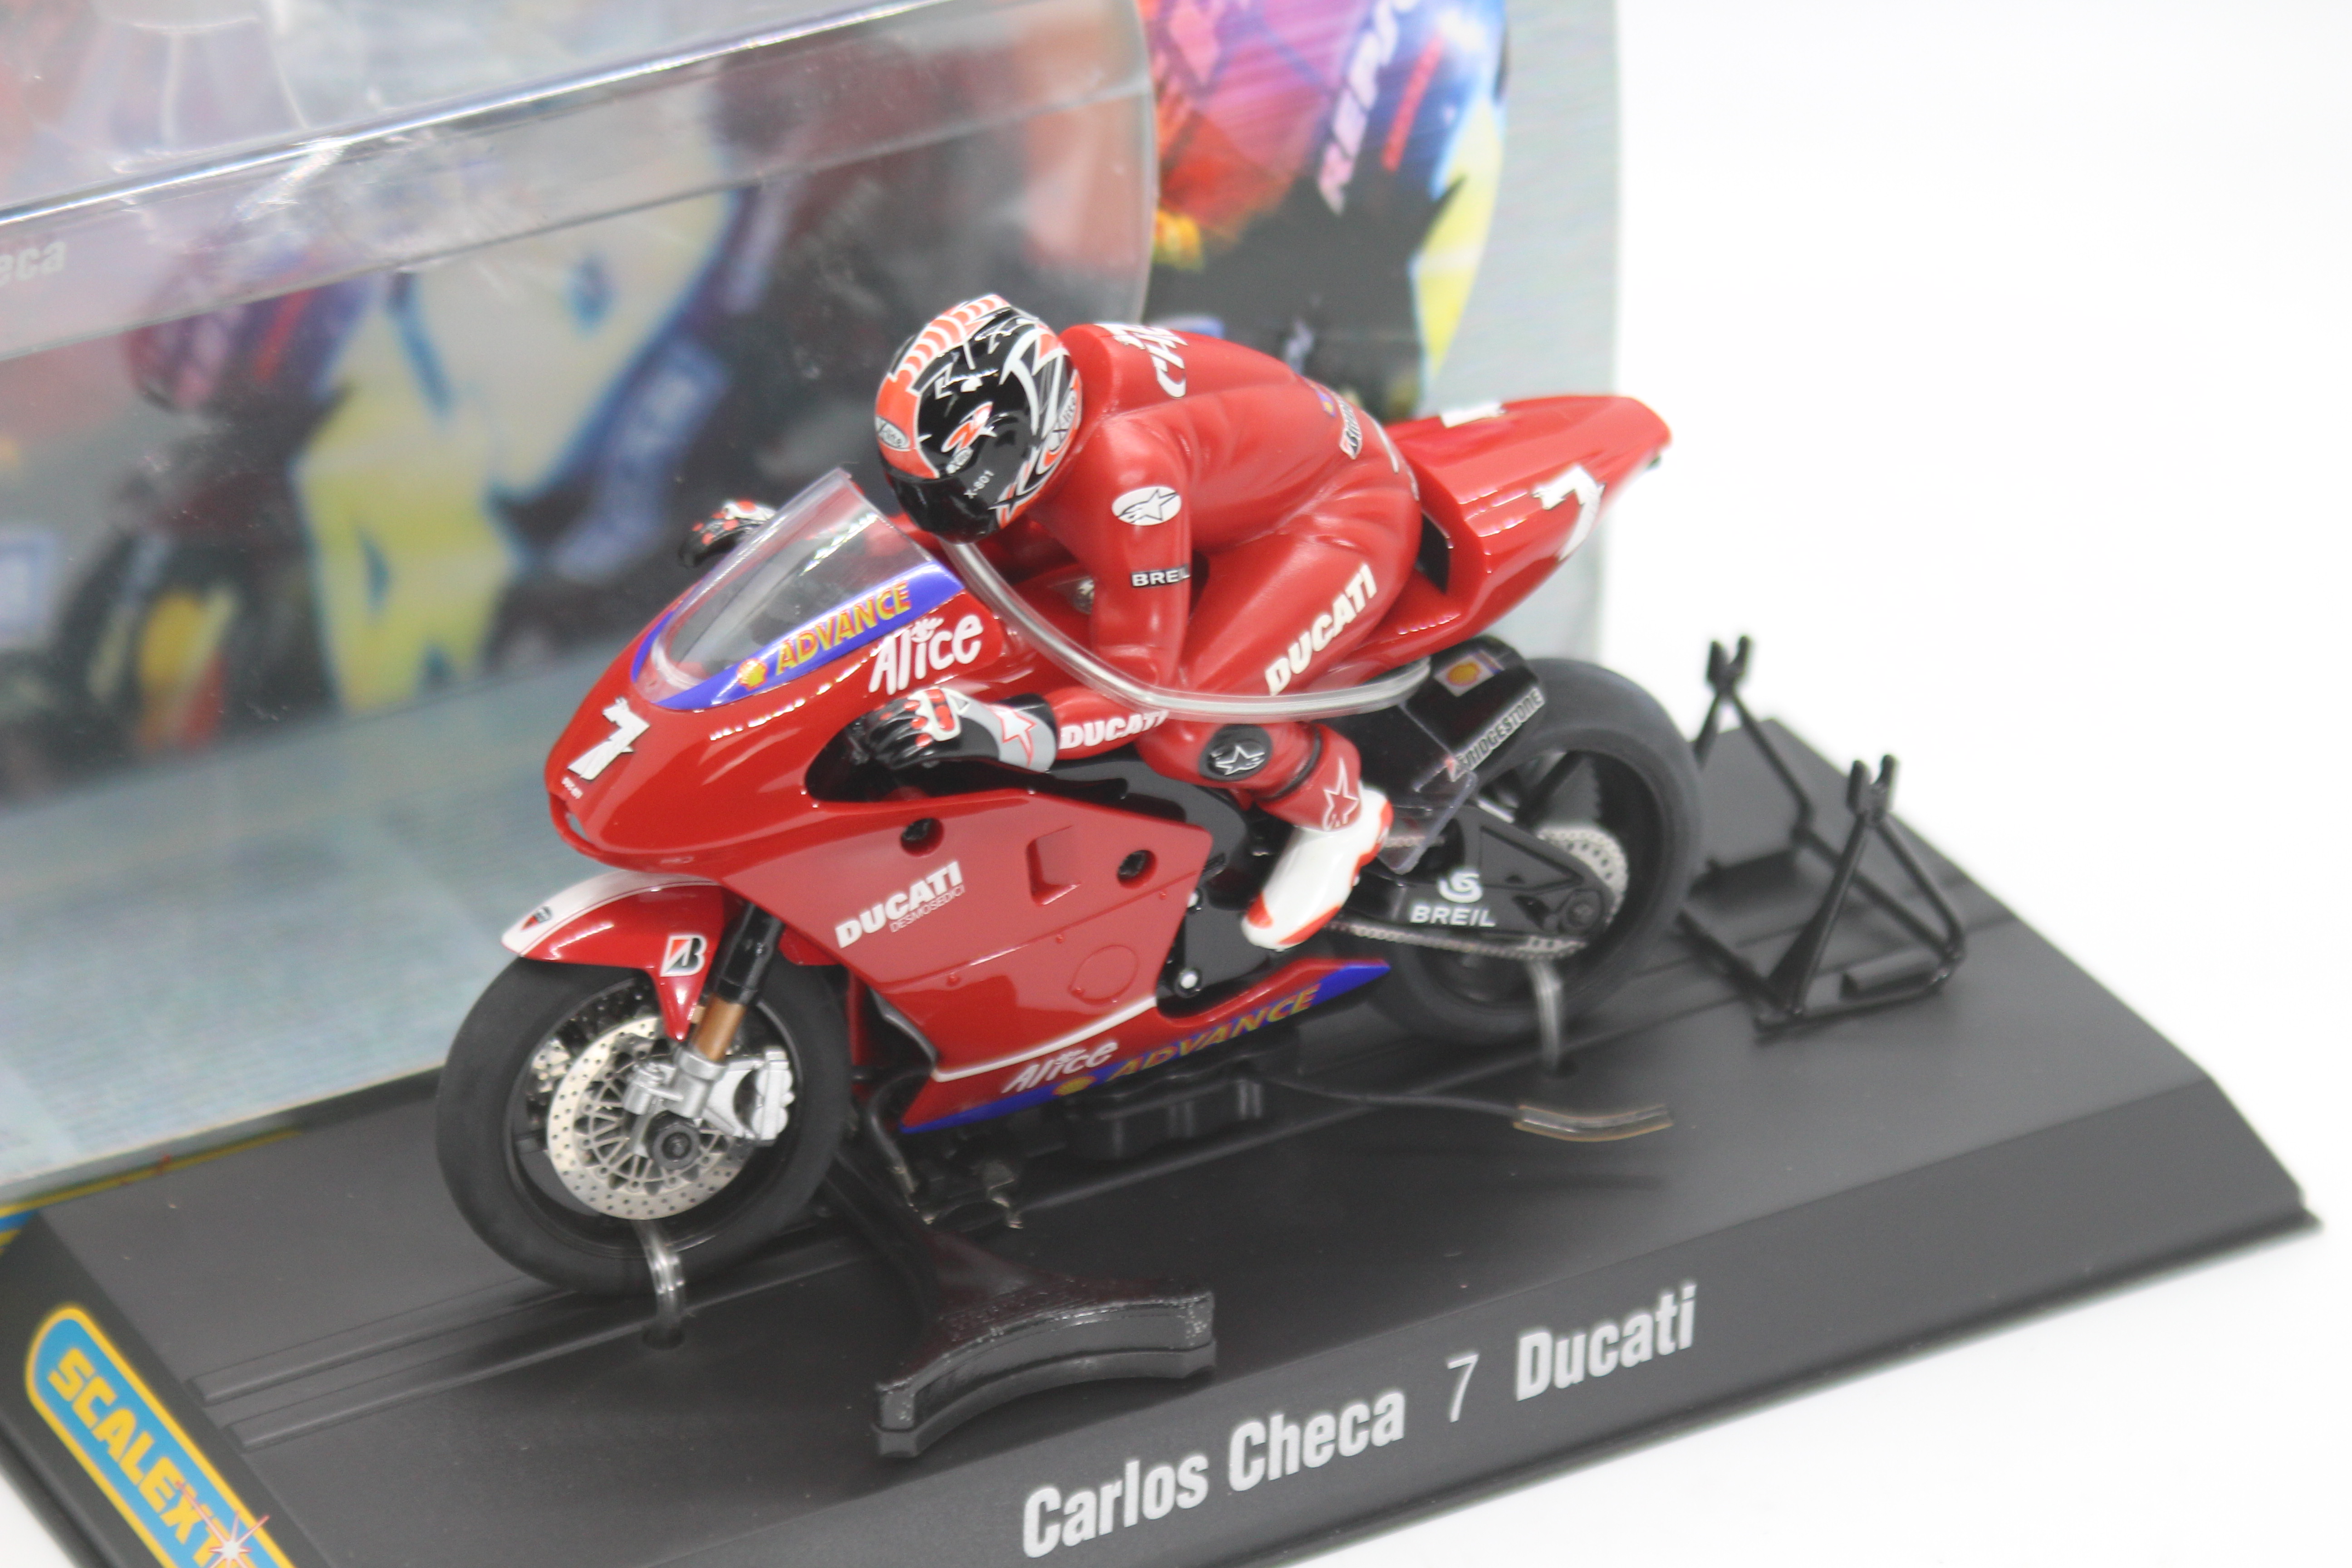 Scalextric - A boxed 2004 Moto GP Ducatti Desmosedici ridden by Carlos Checa # C6023 The model - Image 2 of 2